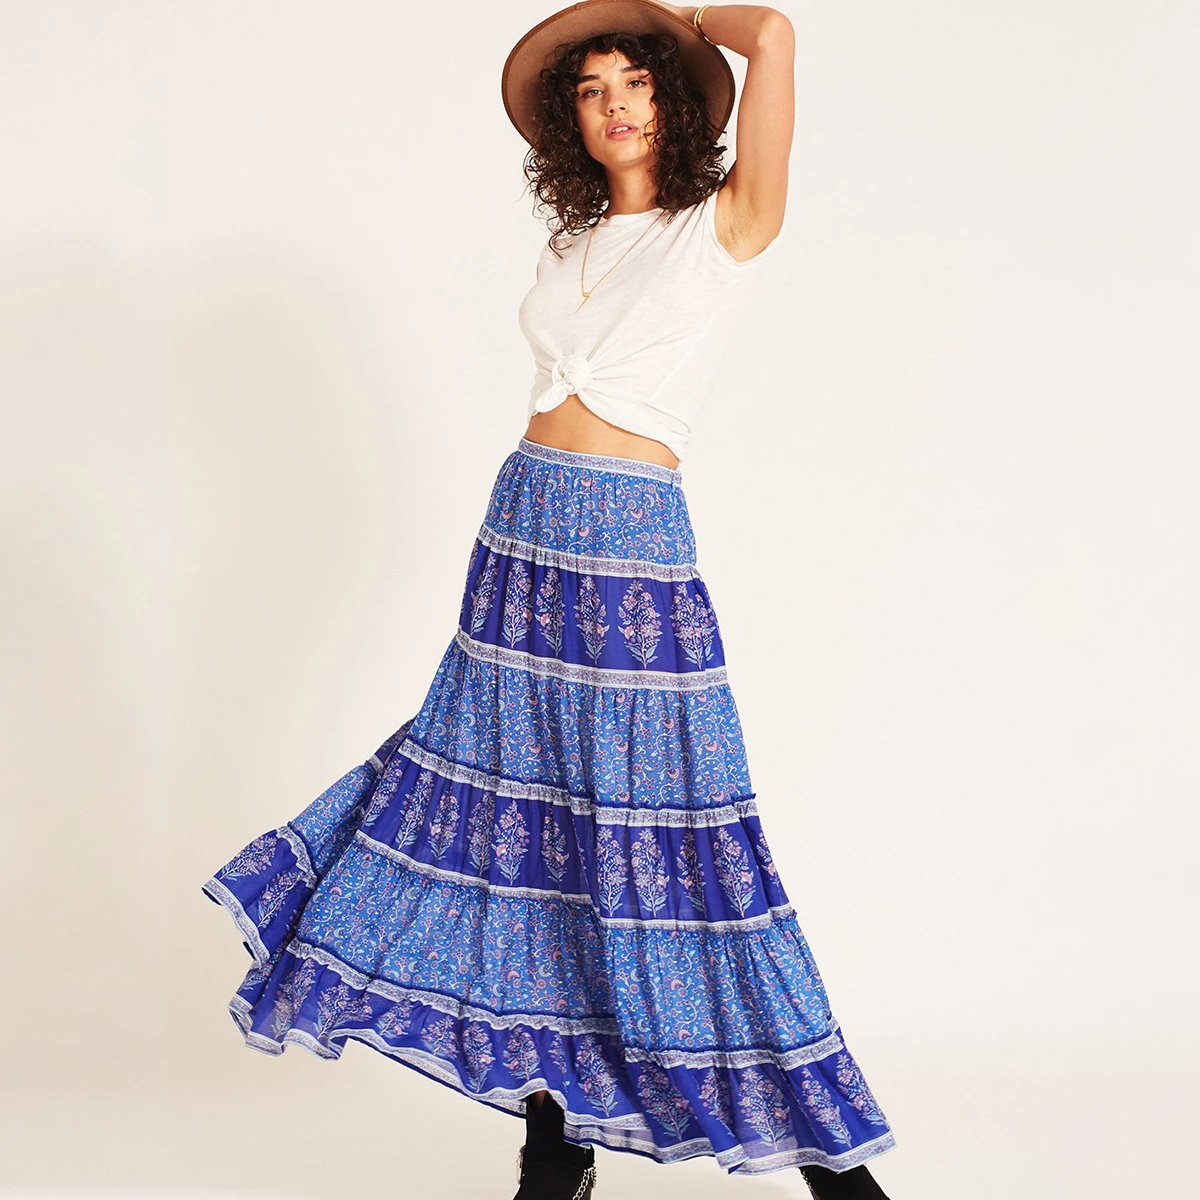 Gypsy Blue Wisteria Maxi Skirt Women Boho Vintage Inspired Long Skirt ...